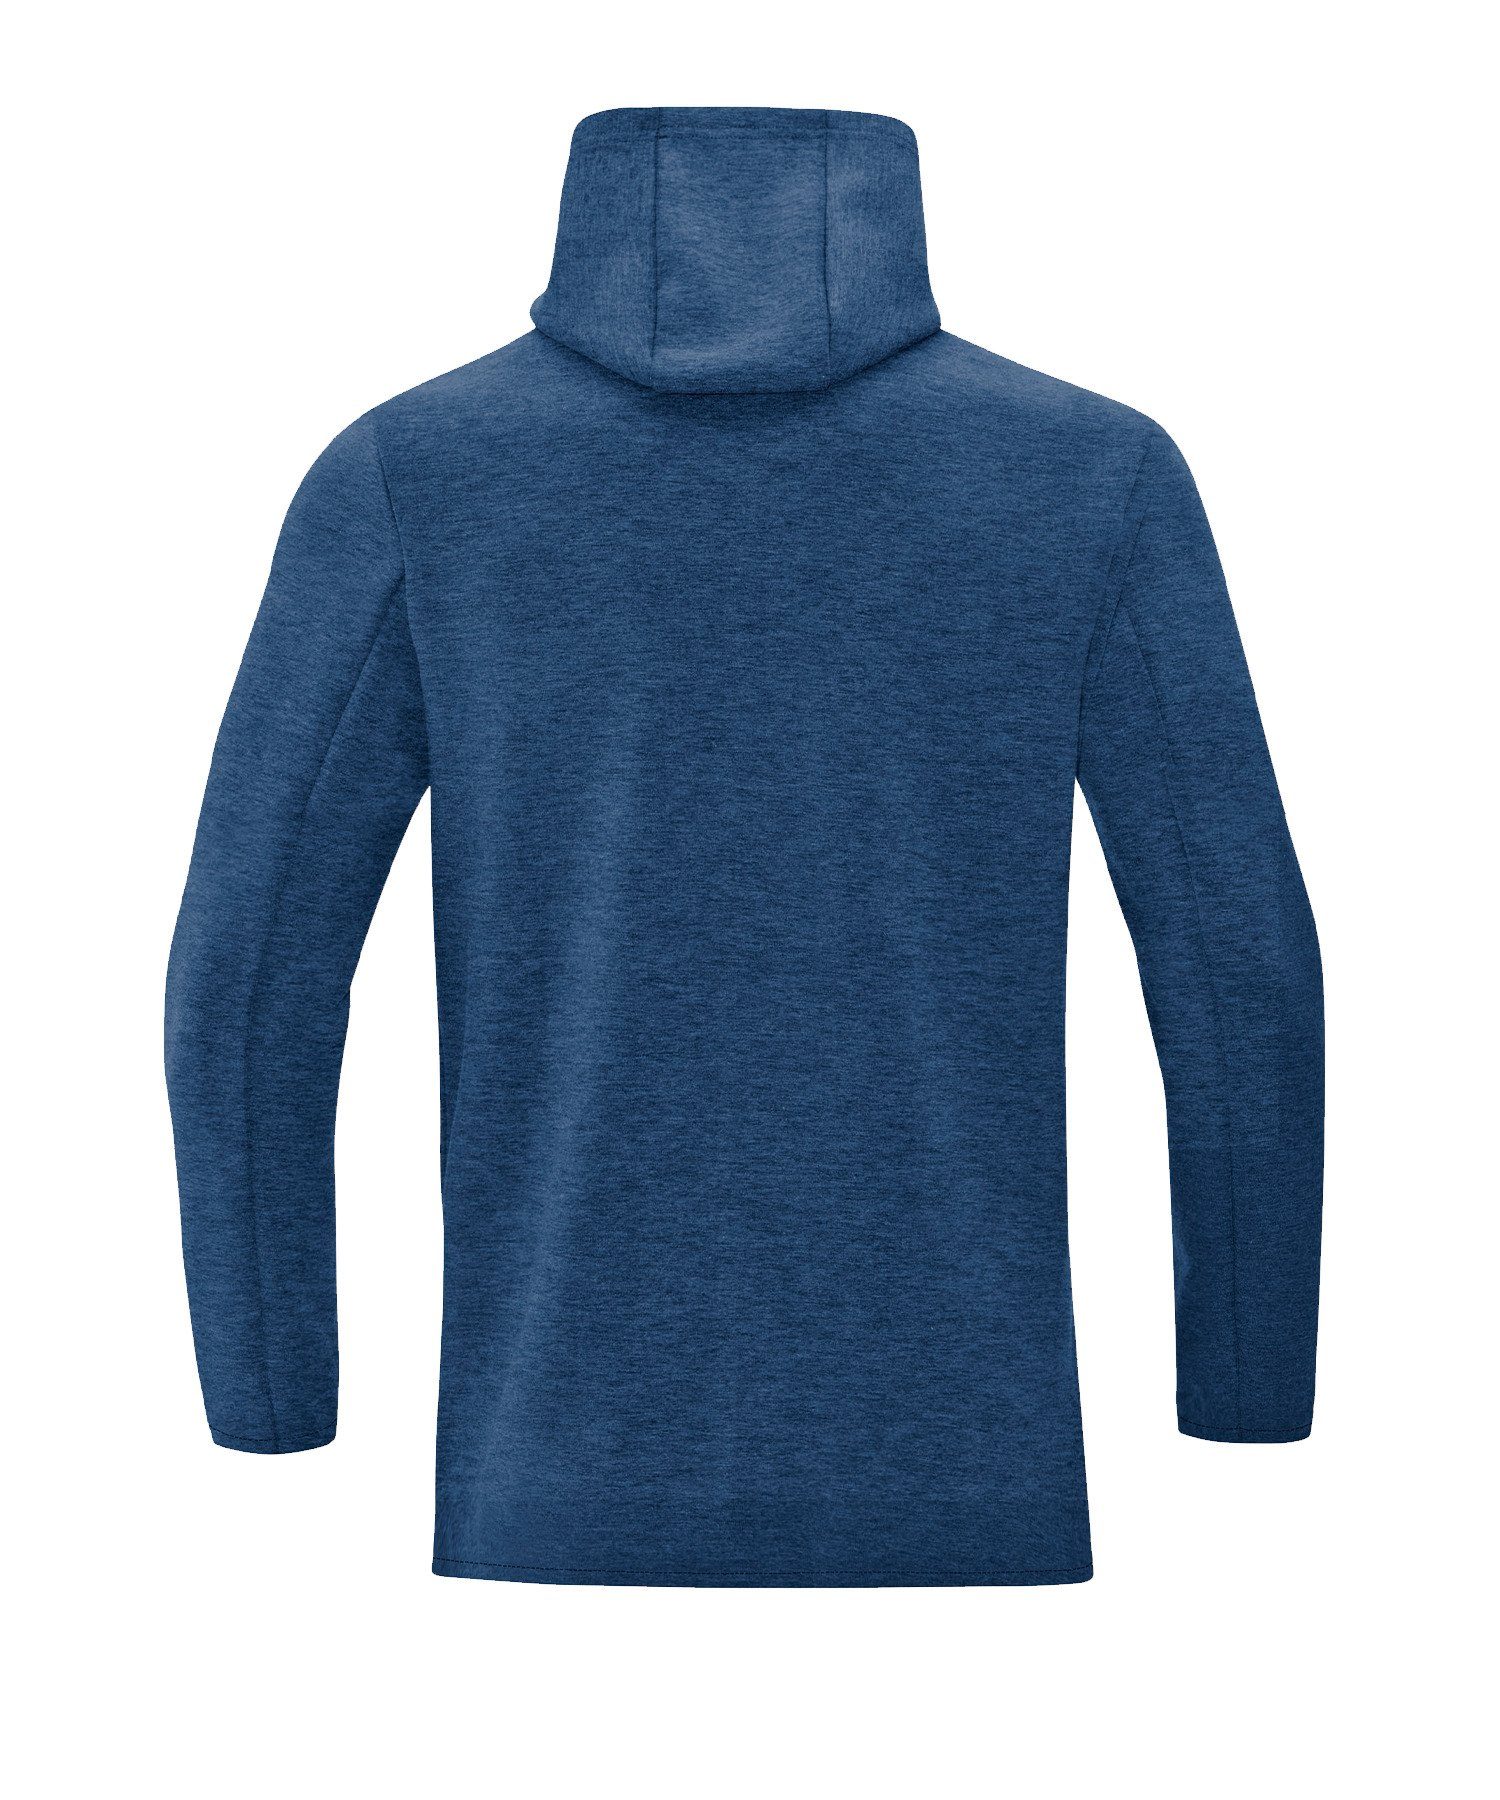 Jako Sweater Premium blau Basic Hoody Damen